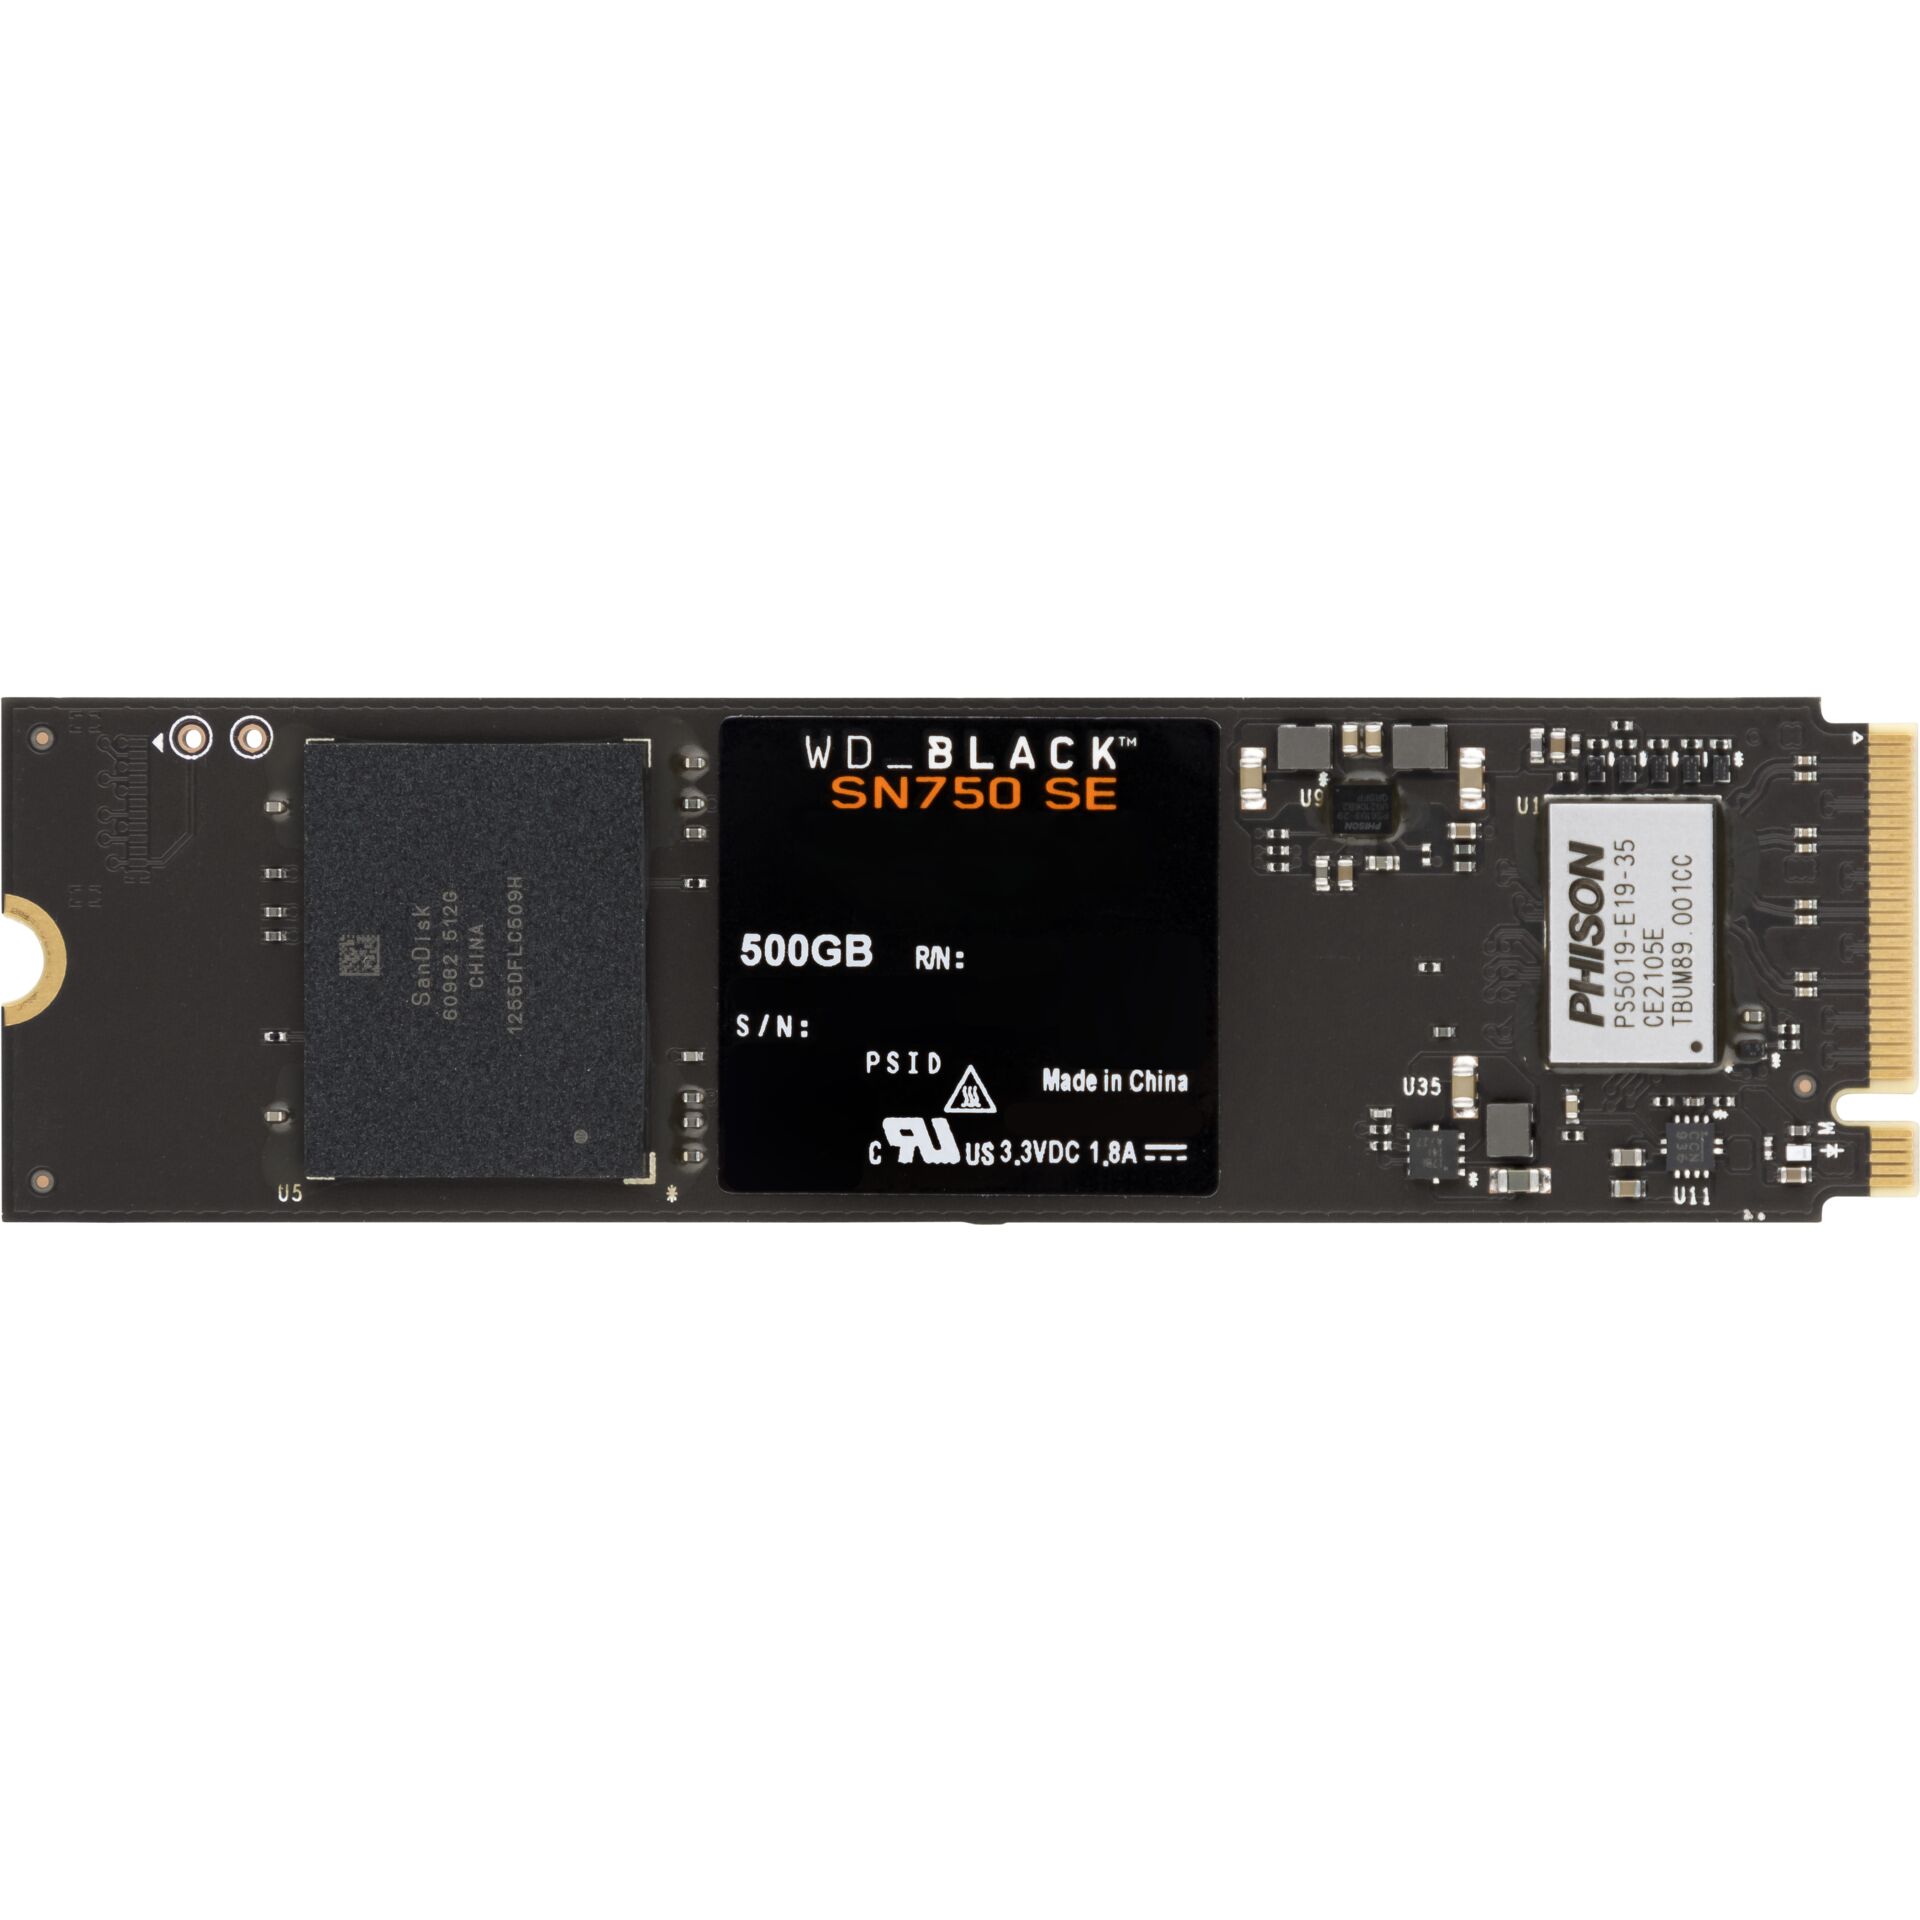 500 GB SSD Western Digital WD_BLACK SN750 SE NVMe, M.2 lesen: 3600MB/s, schreiben: 2000MB/s, TBW: 300TB